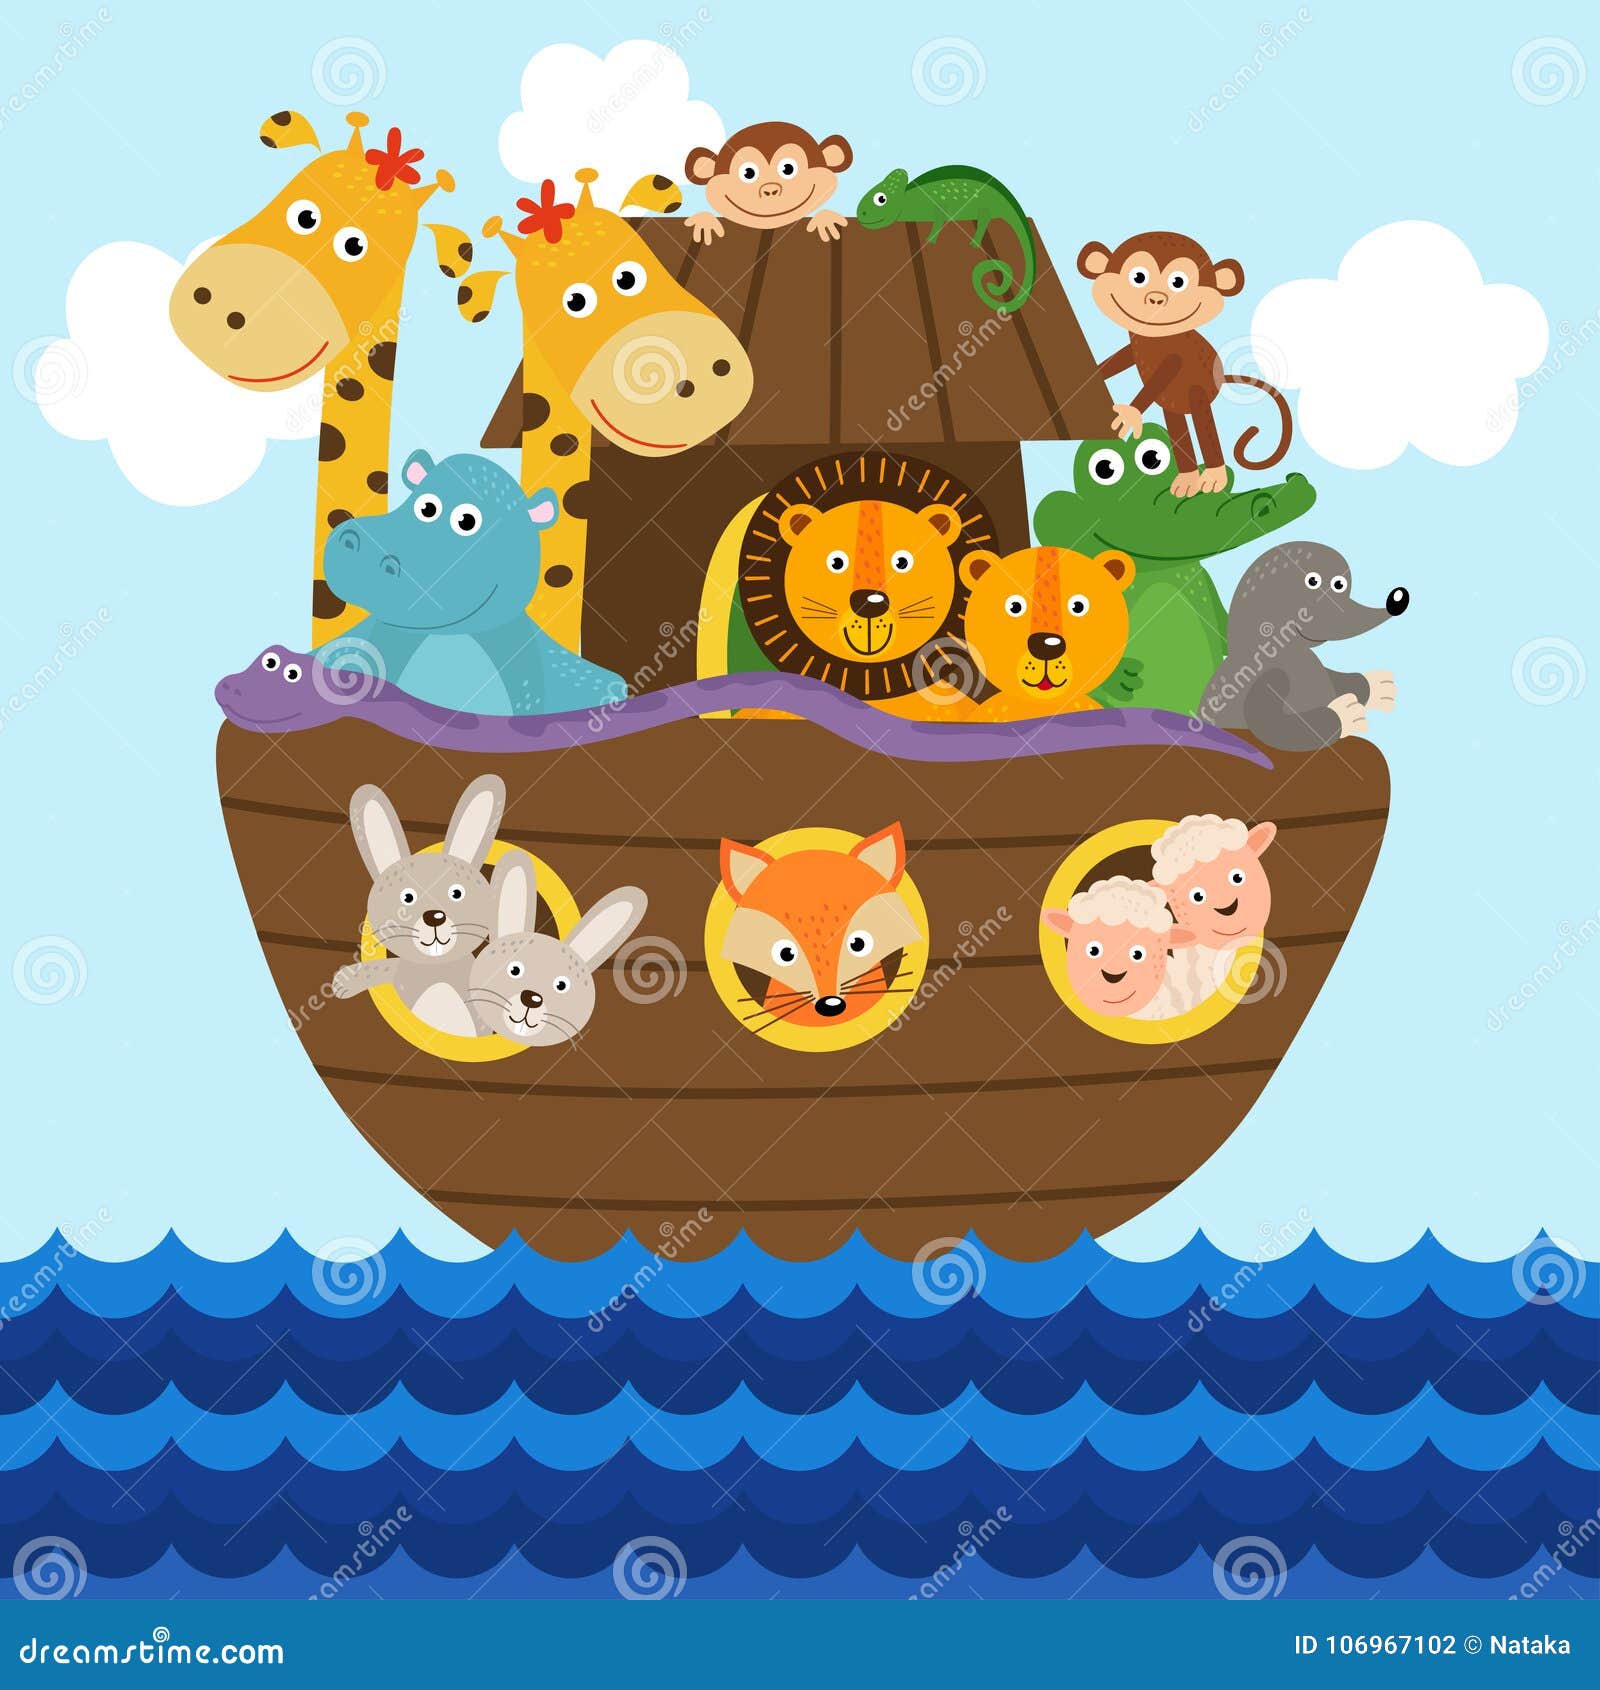 noah`s ark full of animals aboard